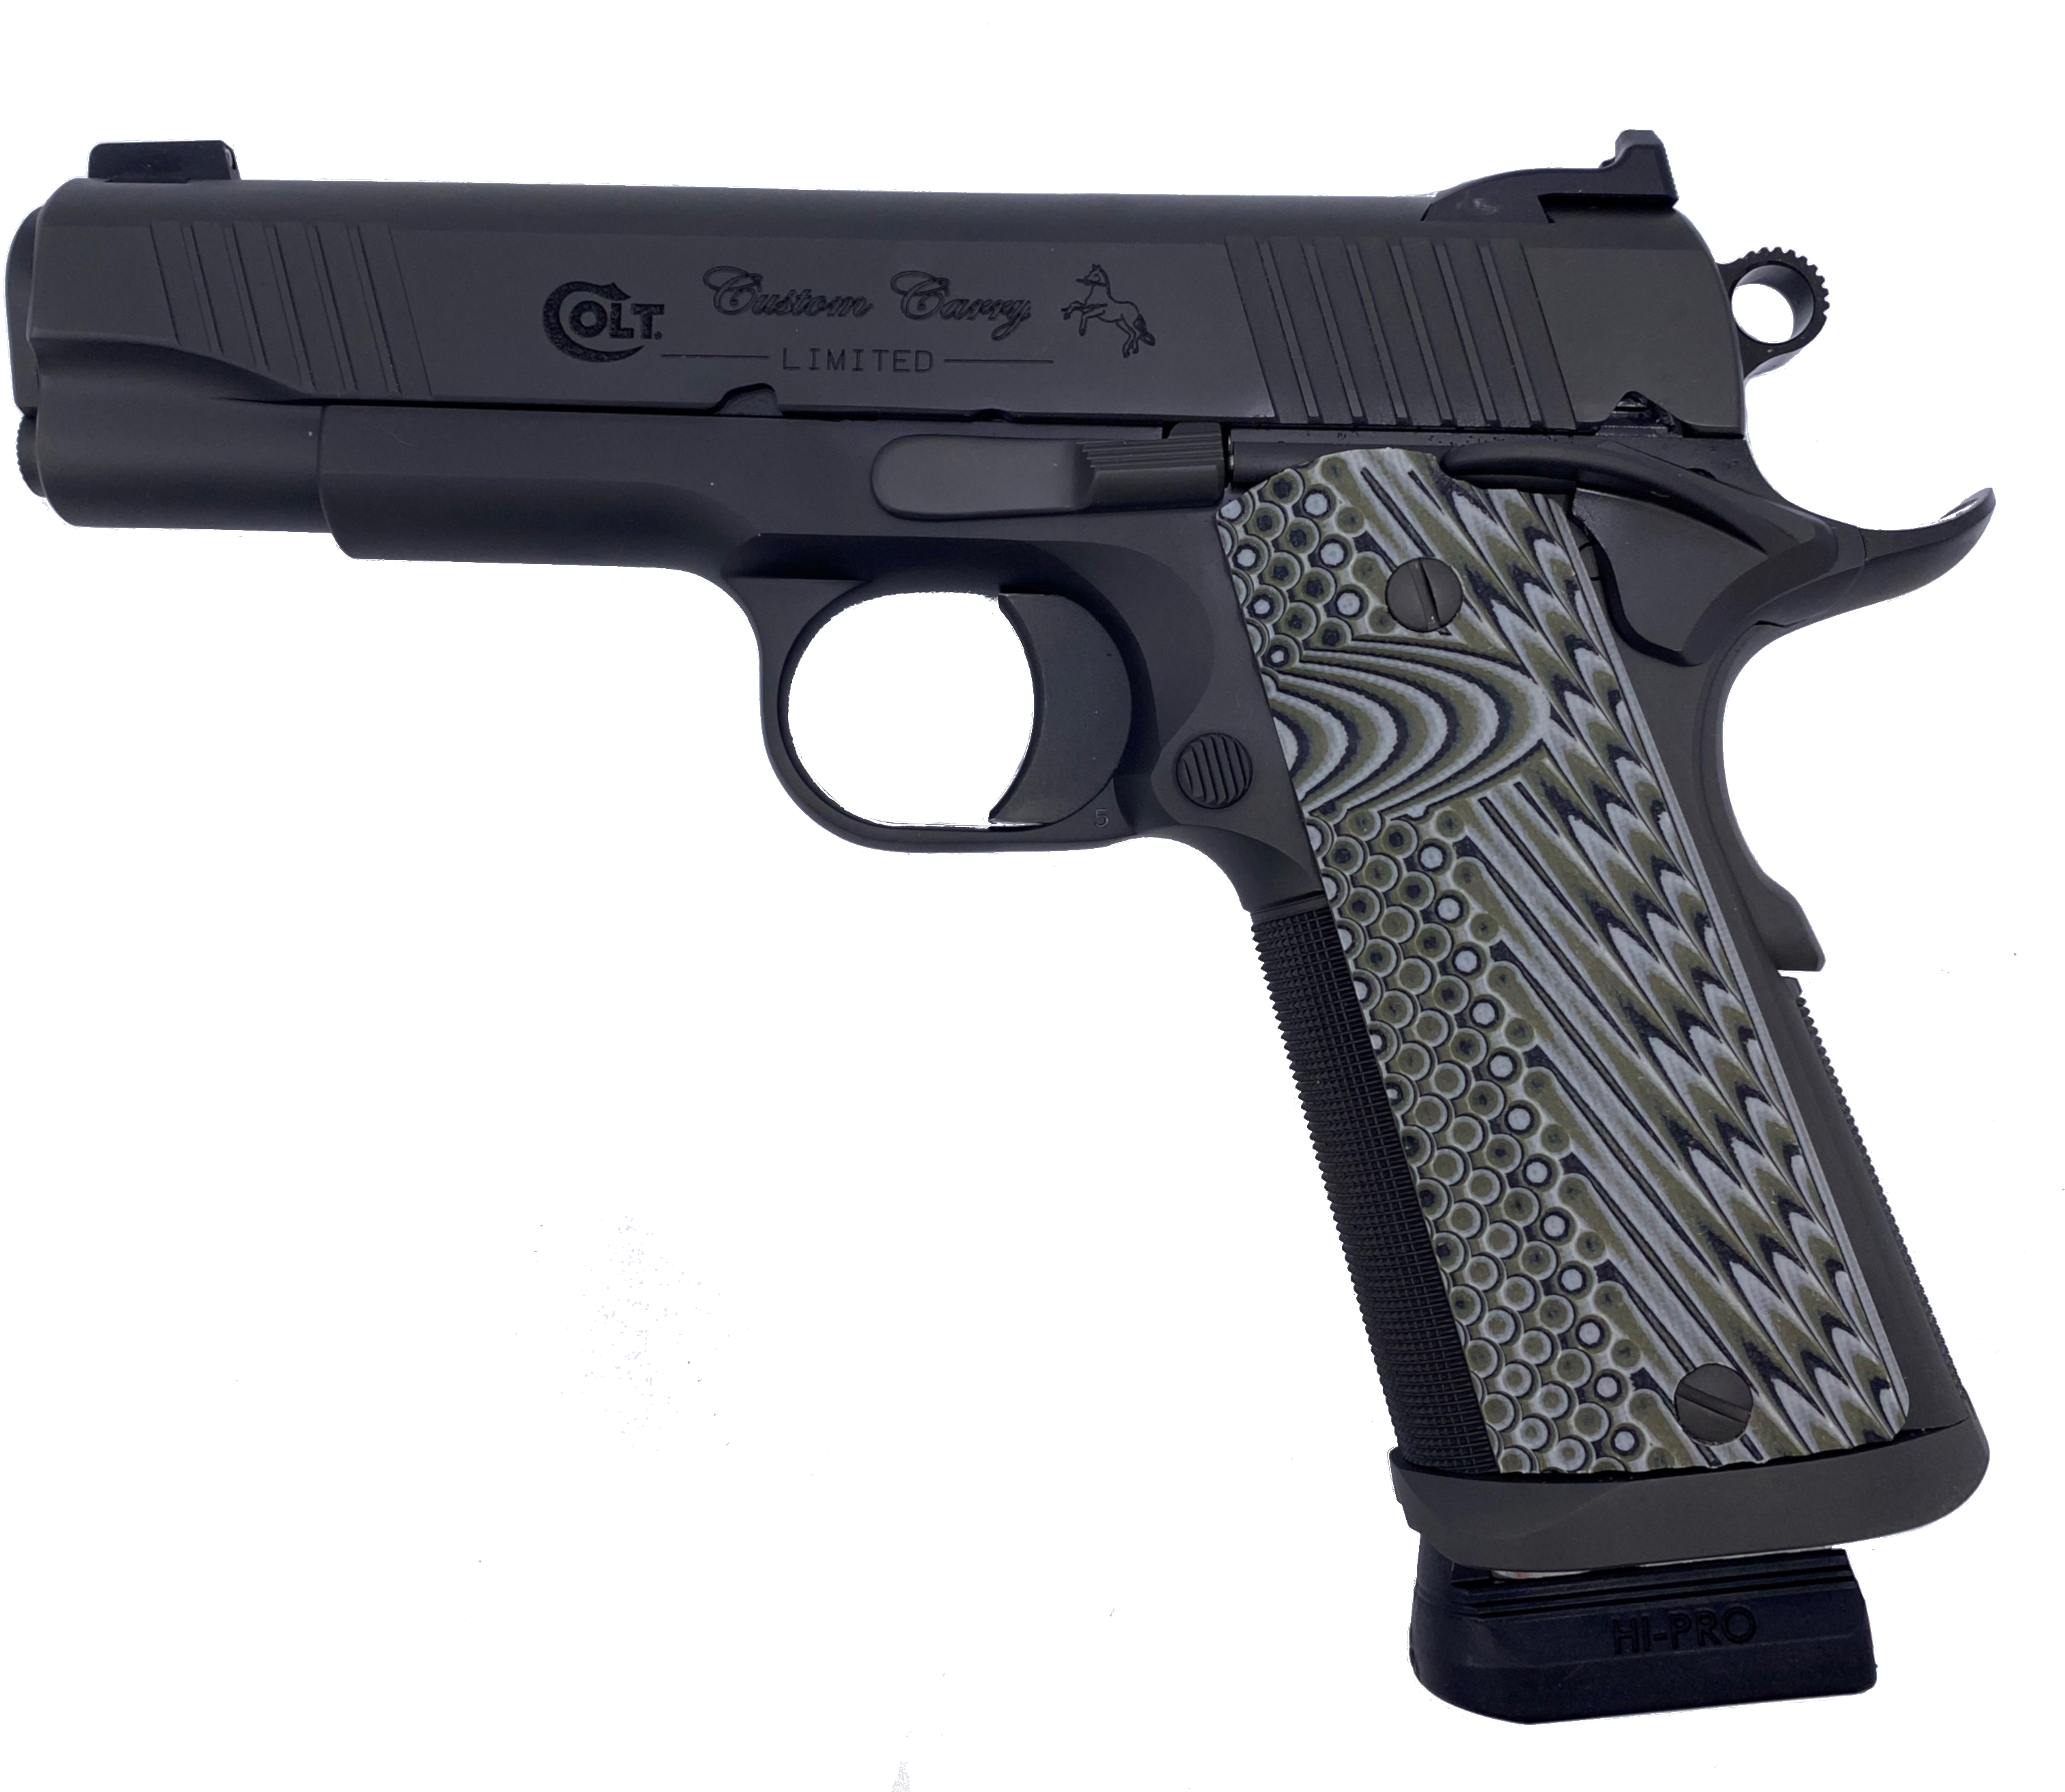 CLT CUSTC 9MM 4.25 SS/GRY 7R - Handguns